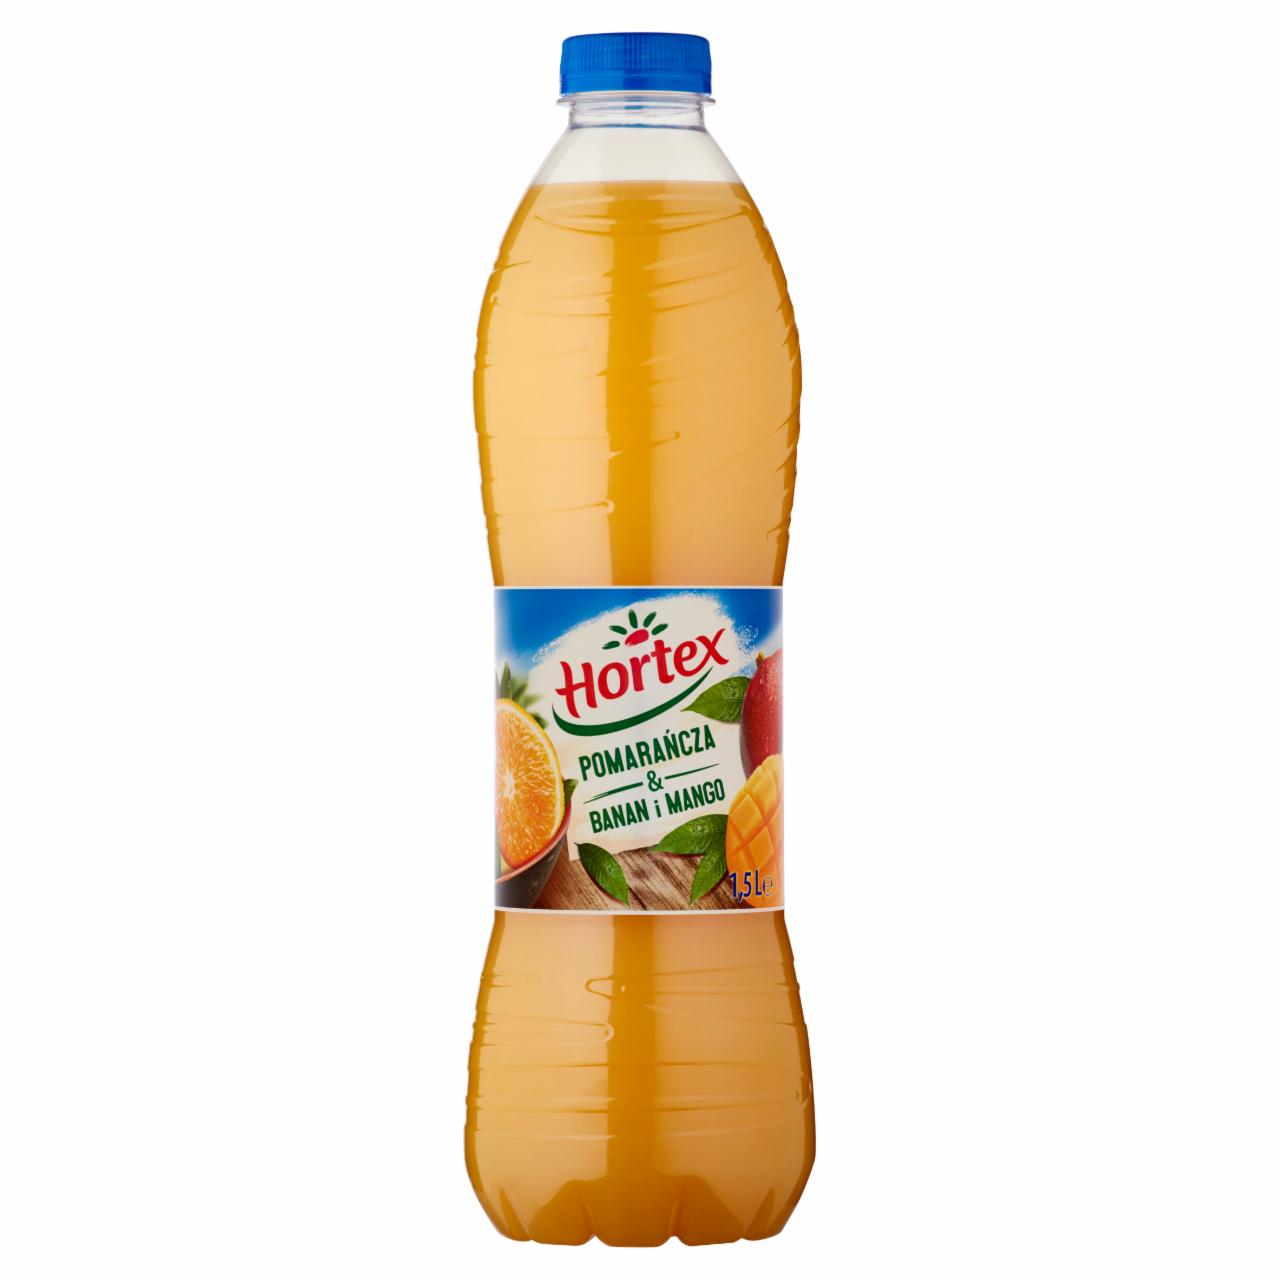 Zdjęcia - Hortex Pomarańcza & banan i mango Nektar 1,5 l